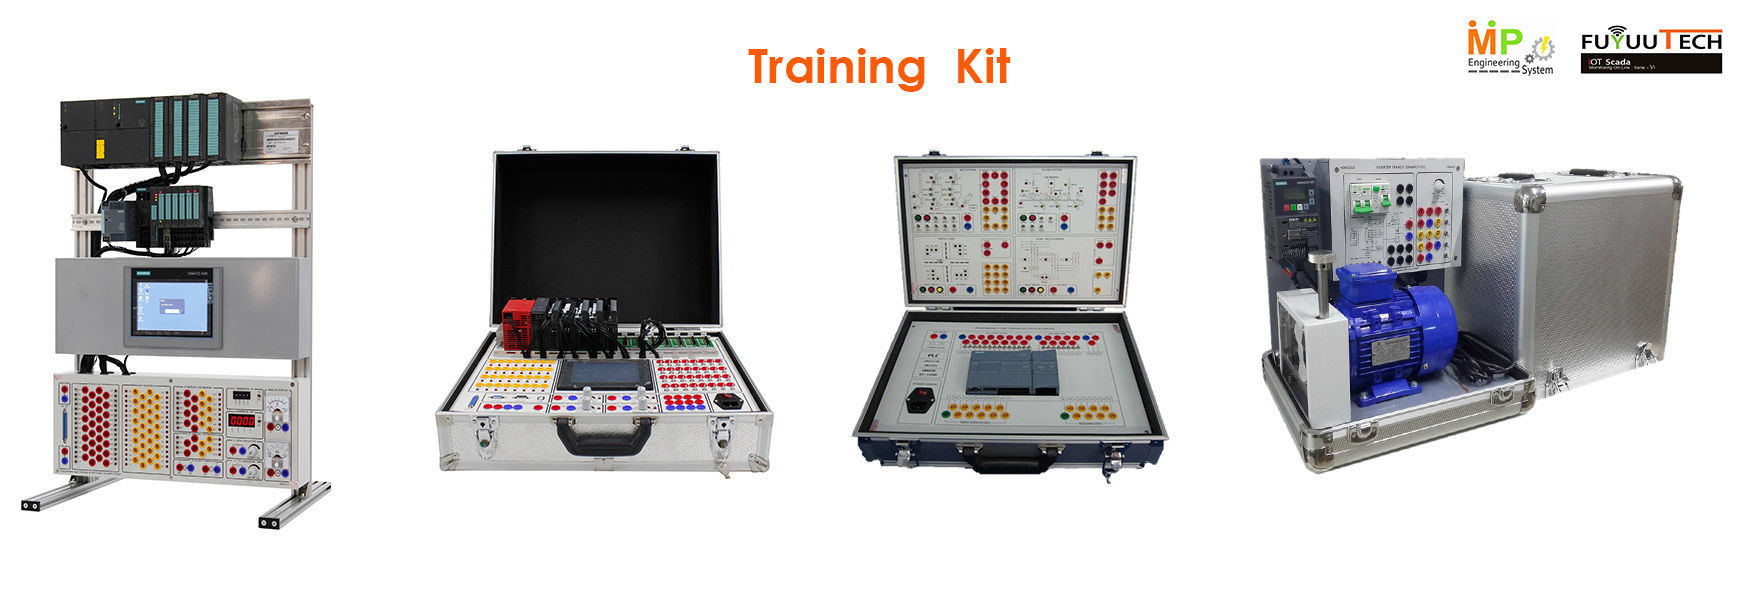 Training Kit, MP Engineering System, Automation